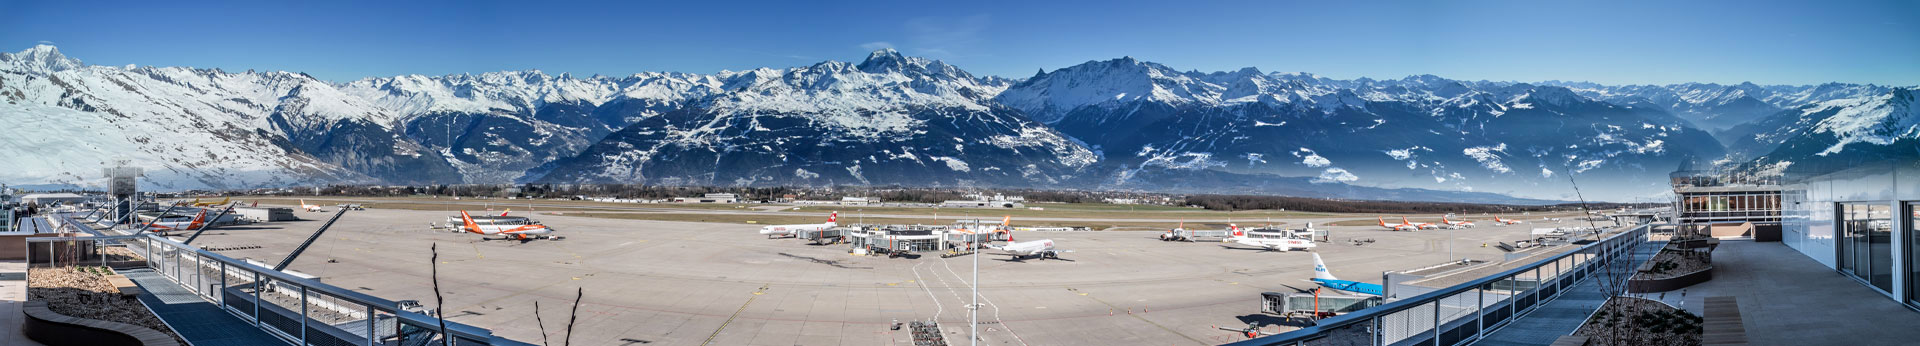 Taxi transfer from Geneva Airport to ski resort Arc 1600, Arc 1800, Arc 1950 or Arc 2000